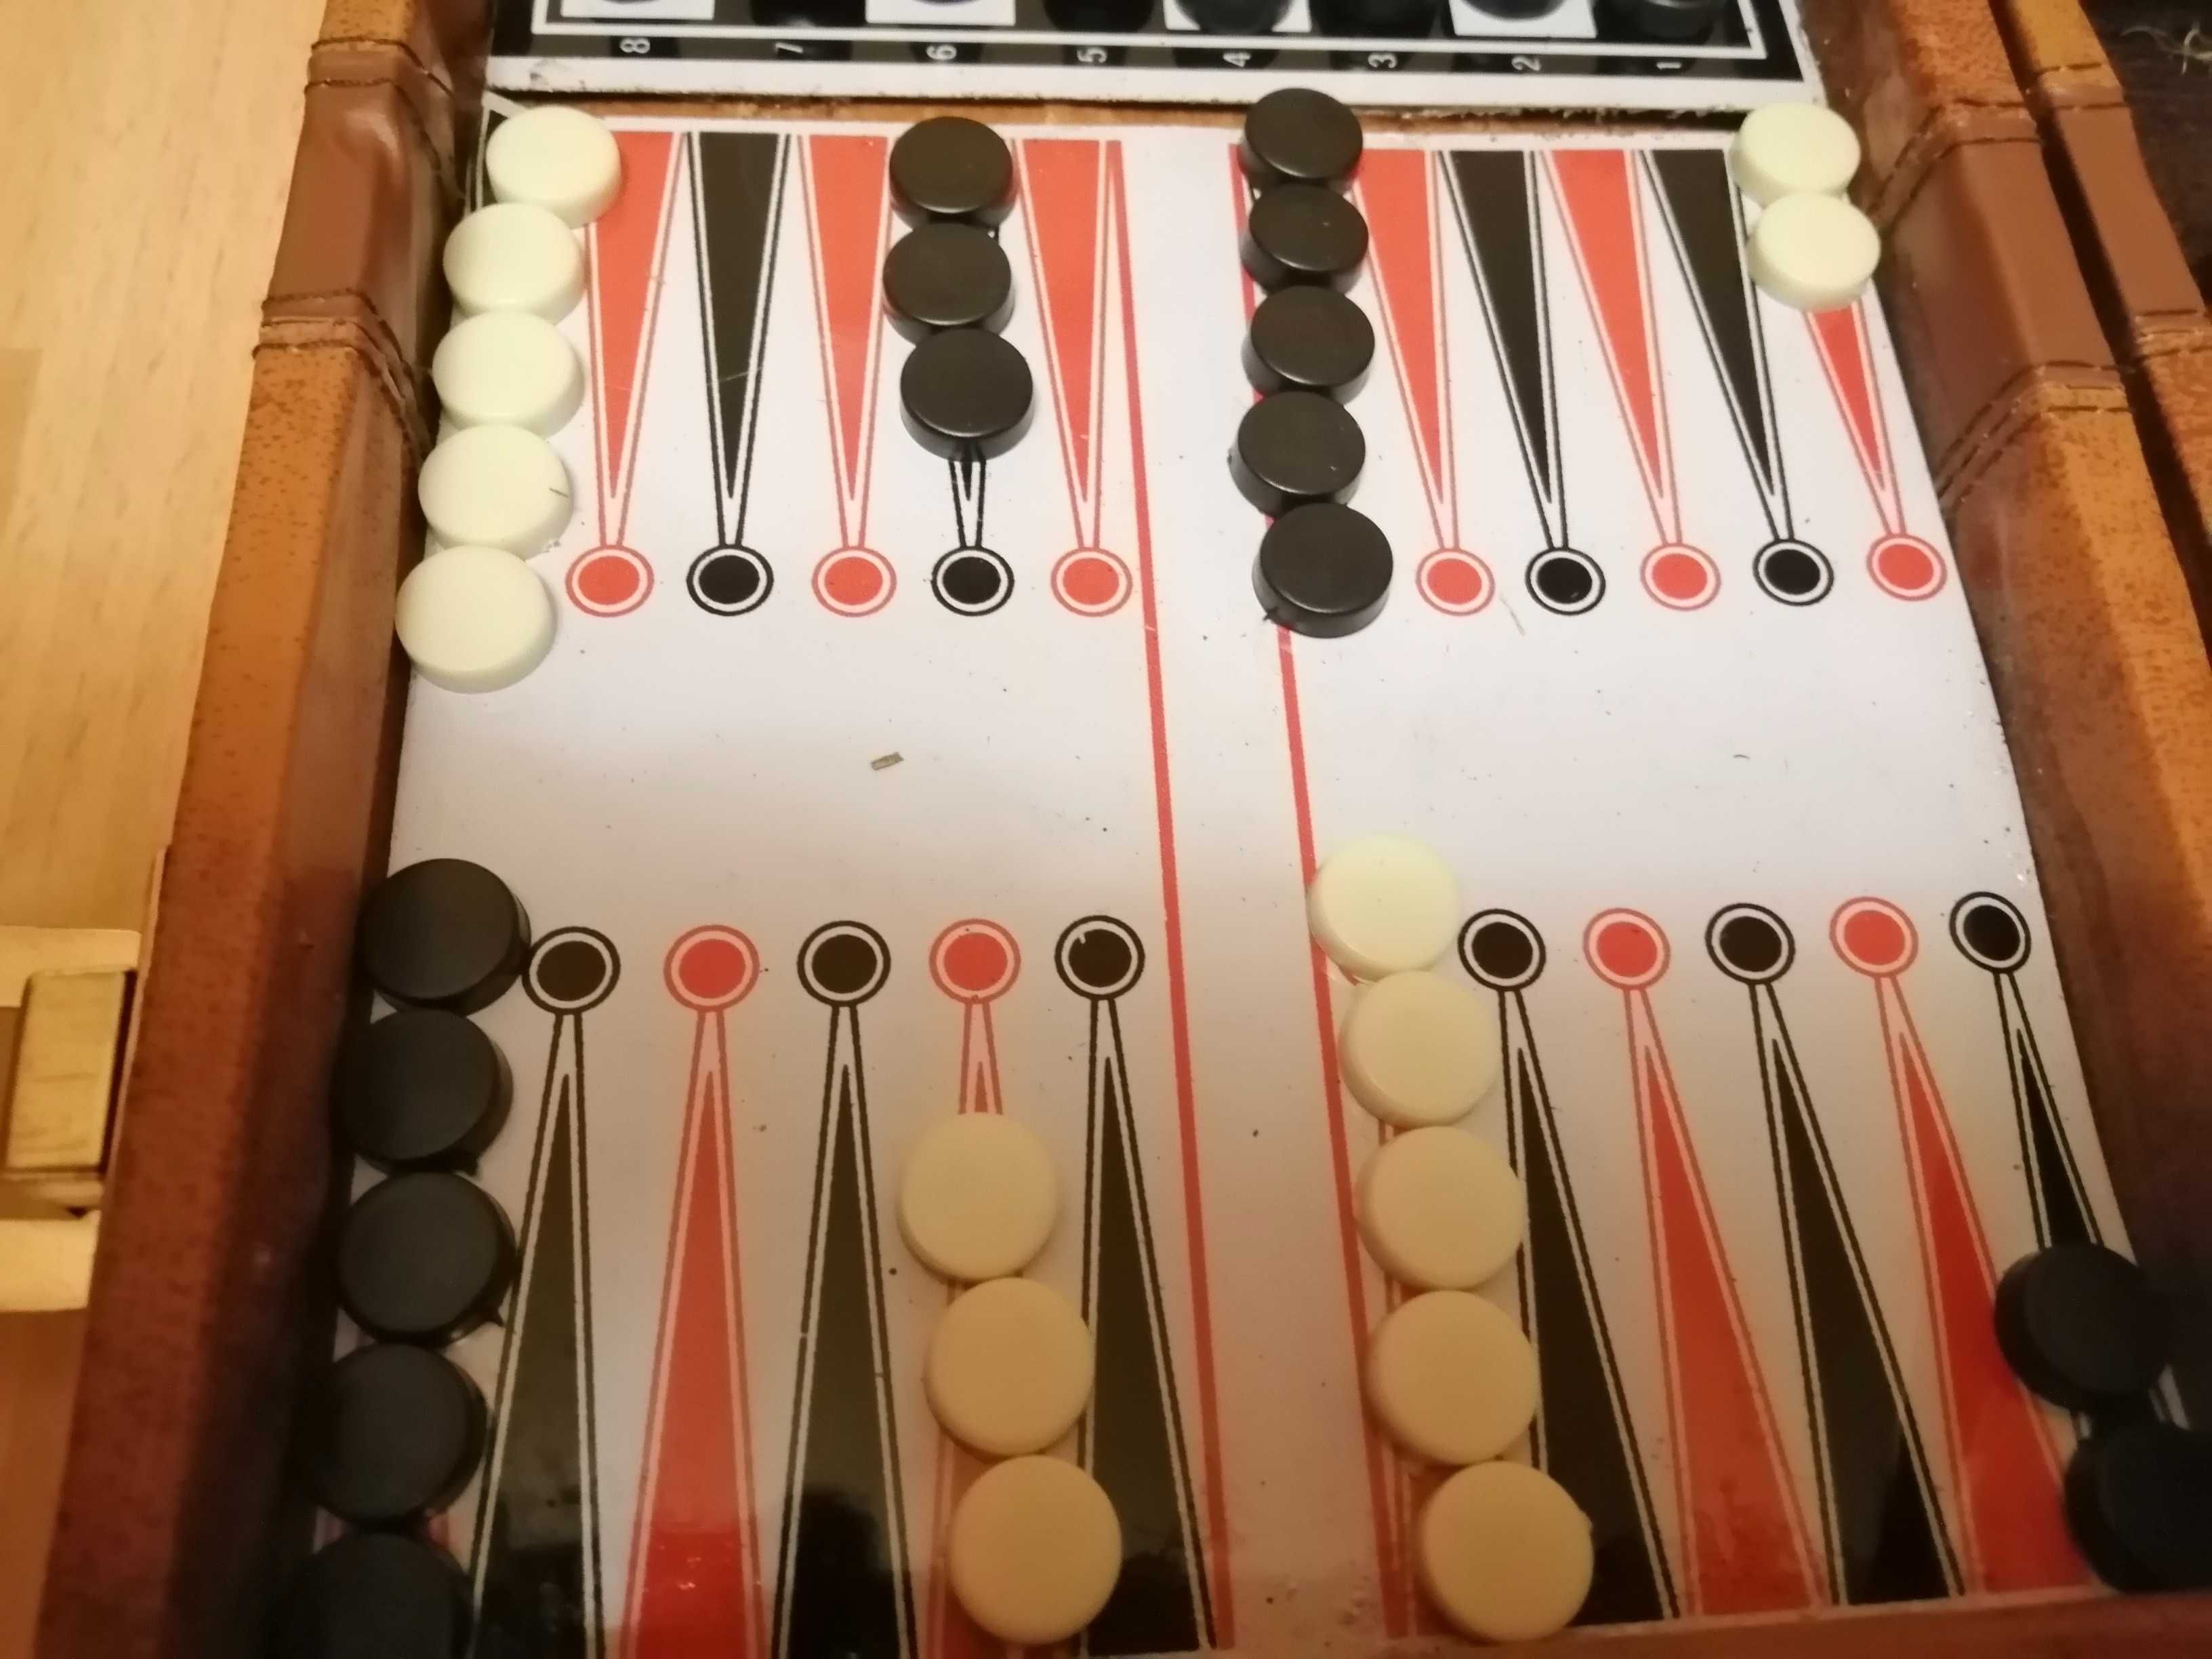 Joc de table, șah, domino magnetic